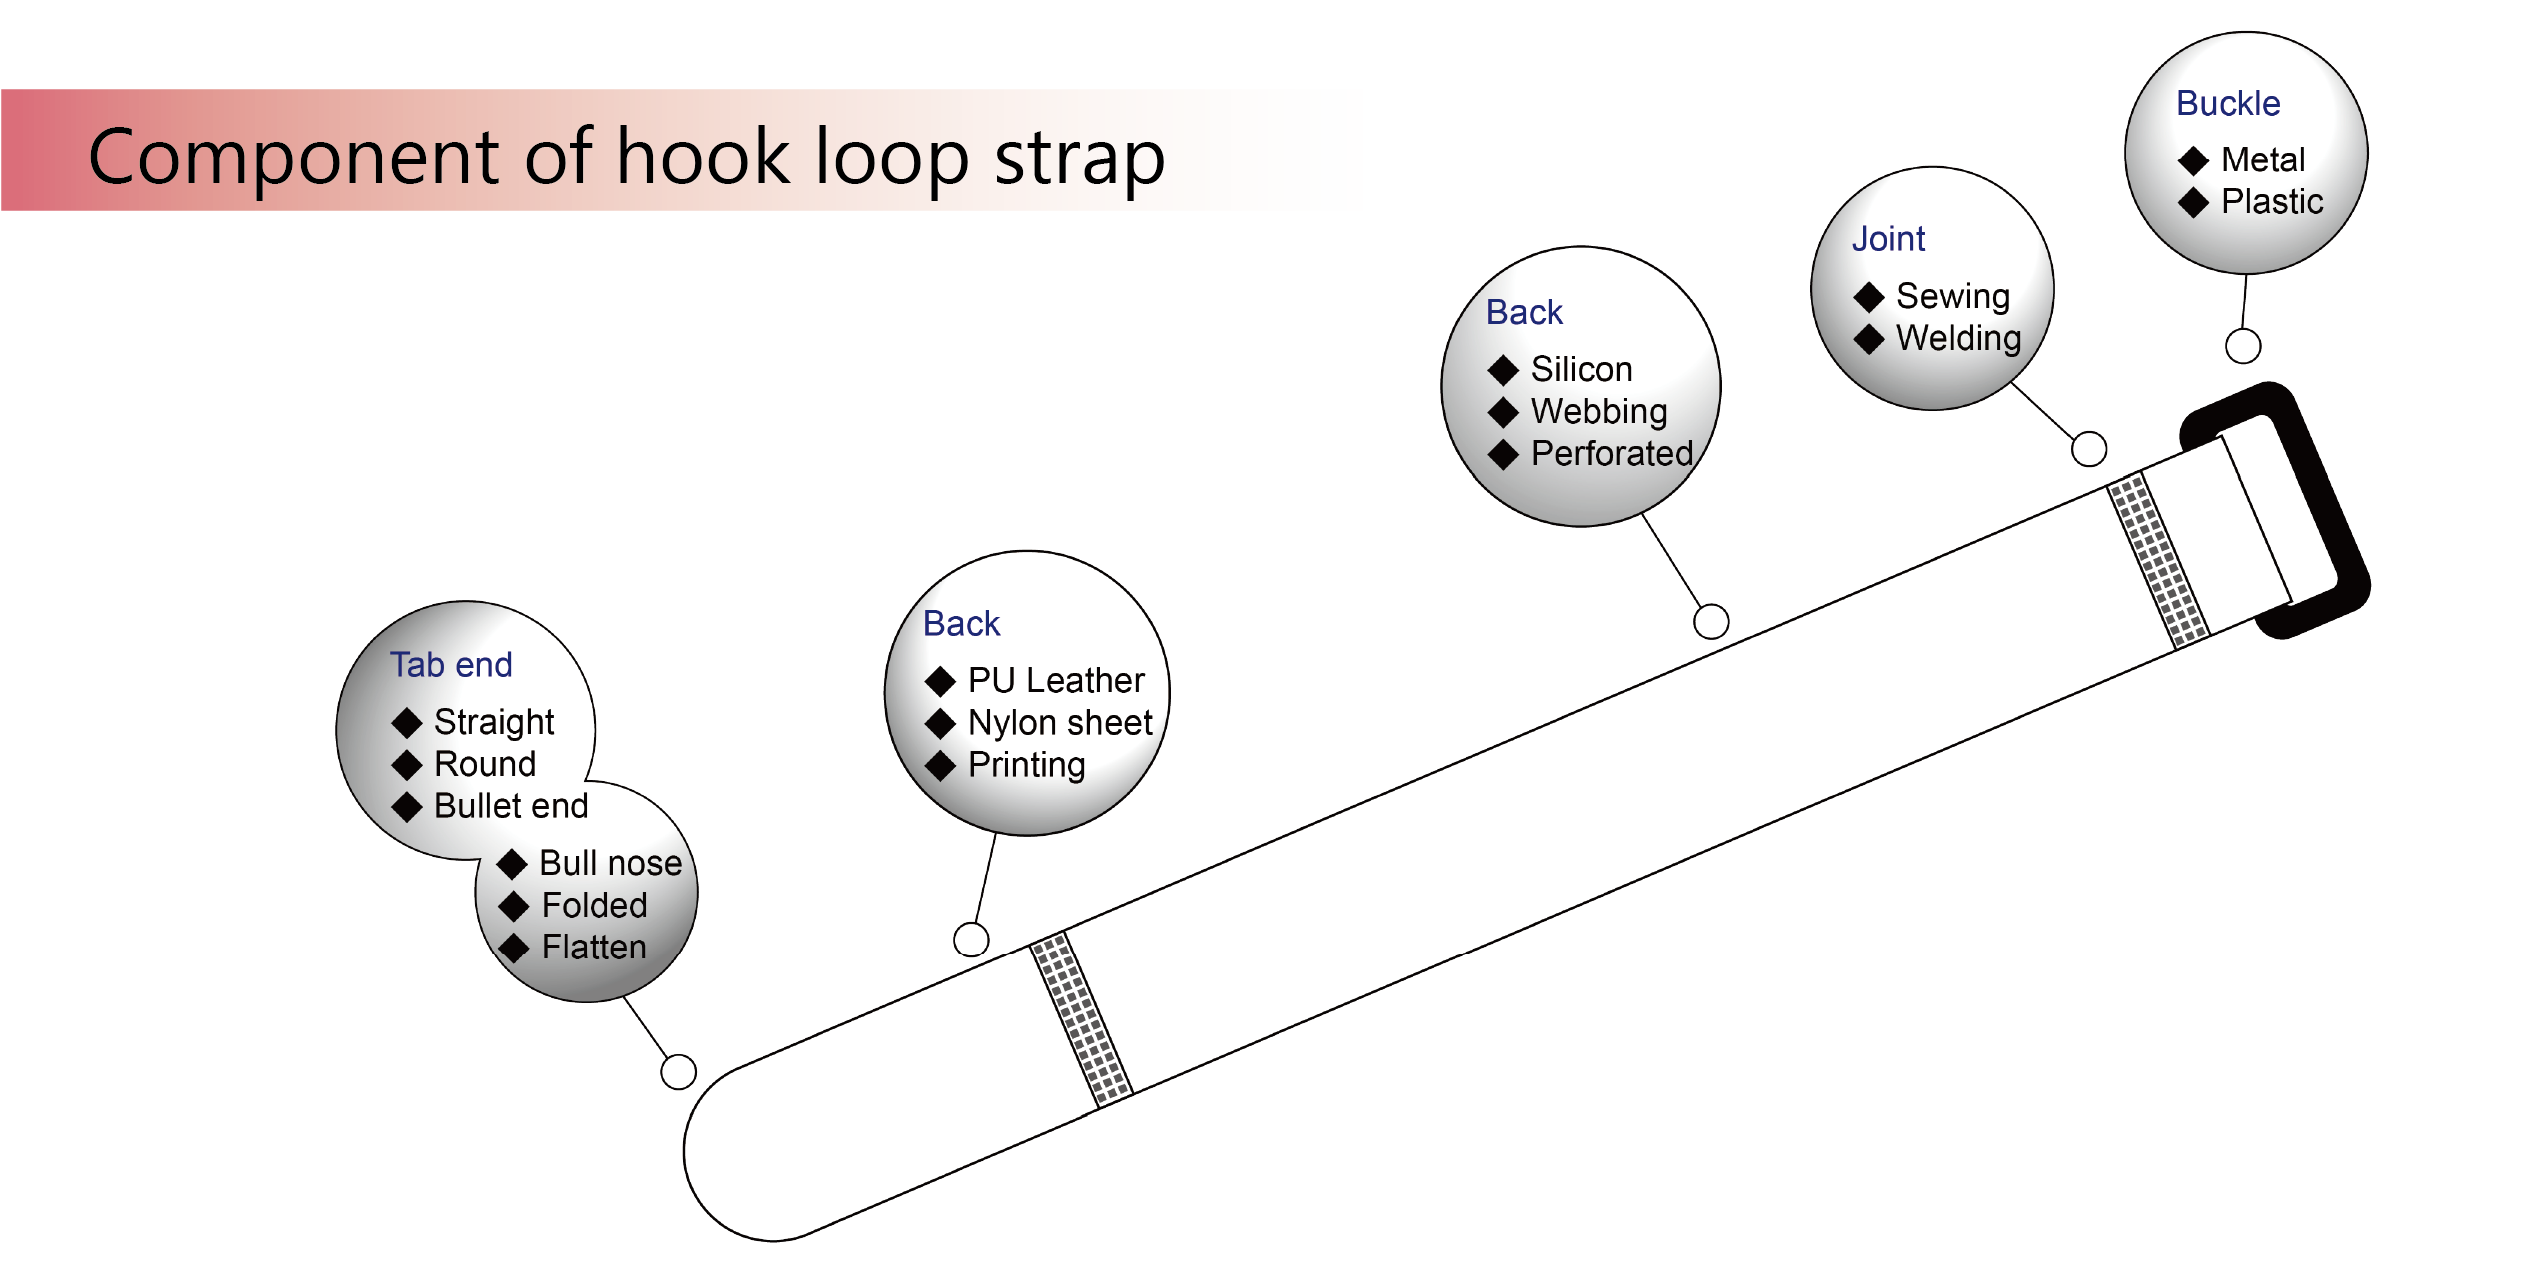 Komponen dari tali pengikat hook loop